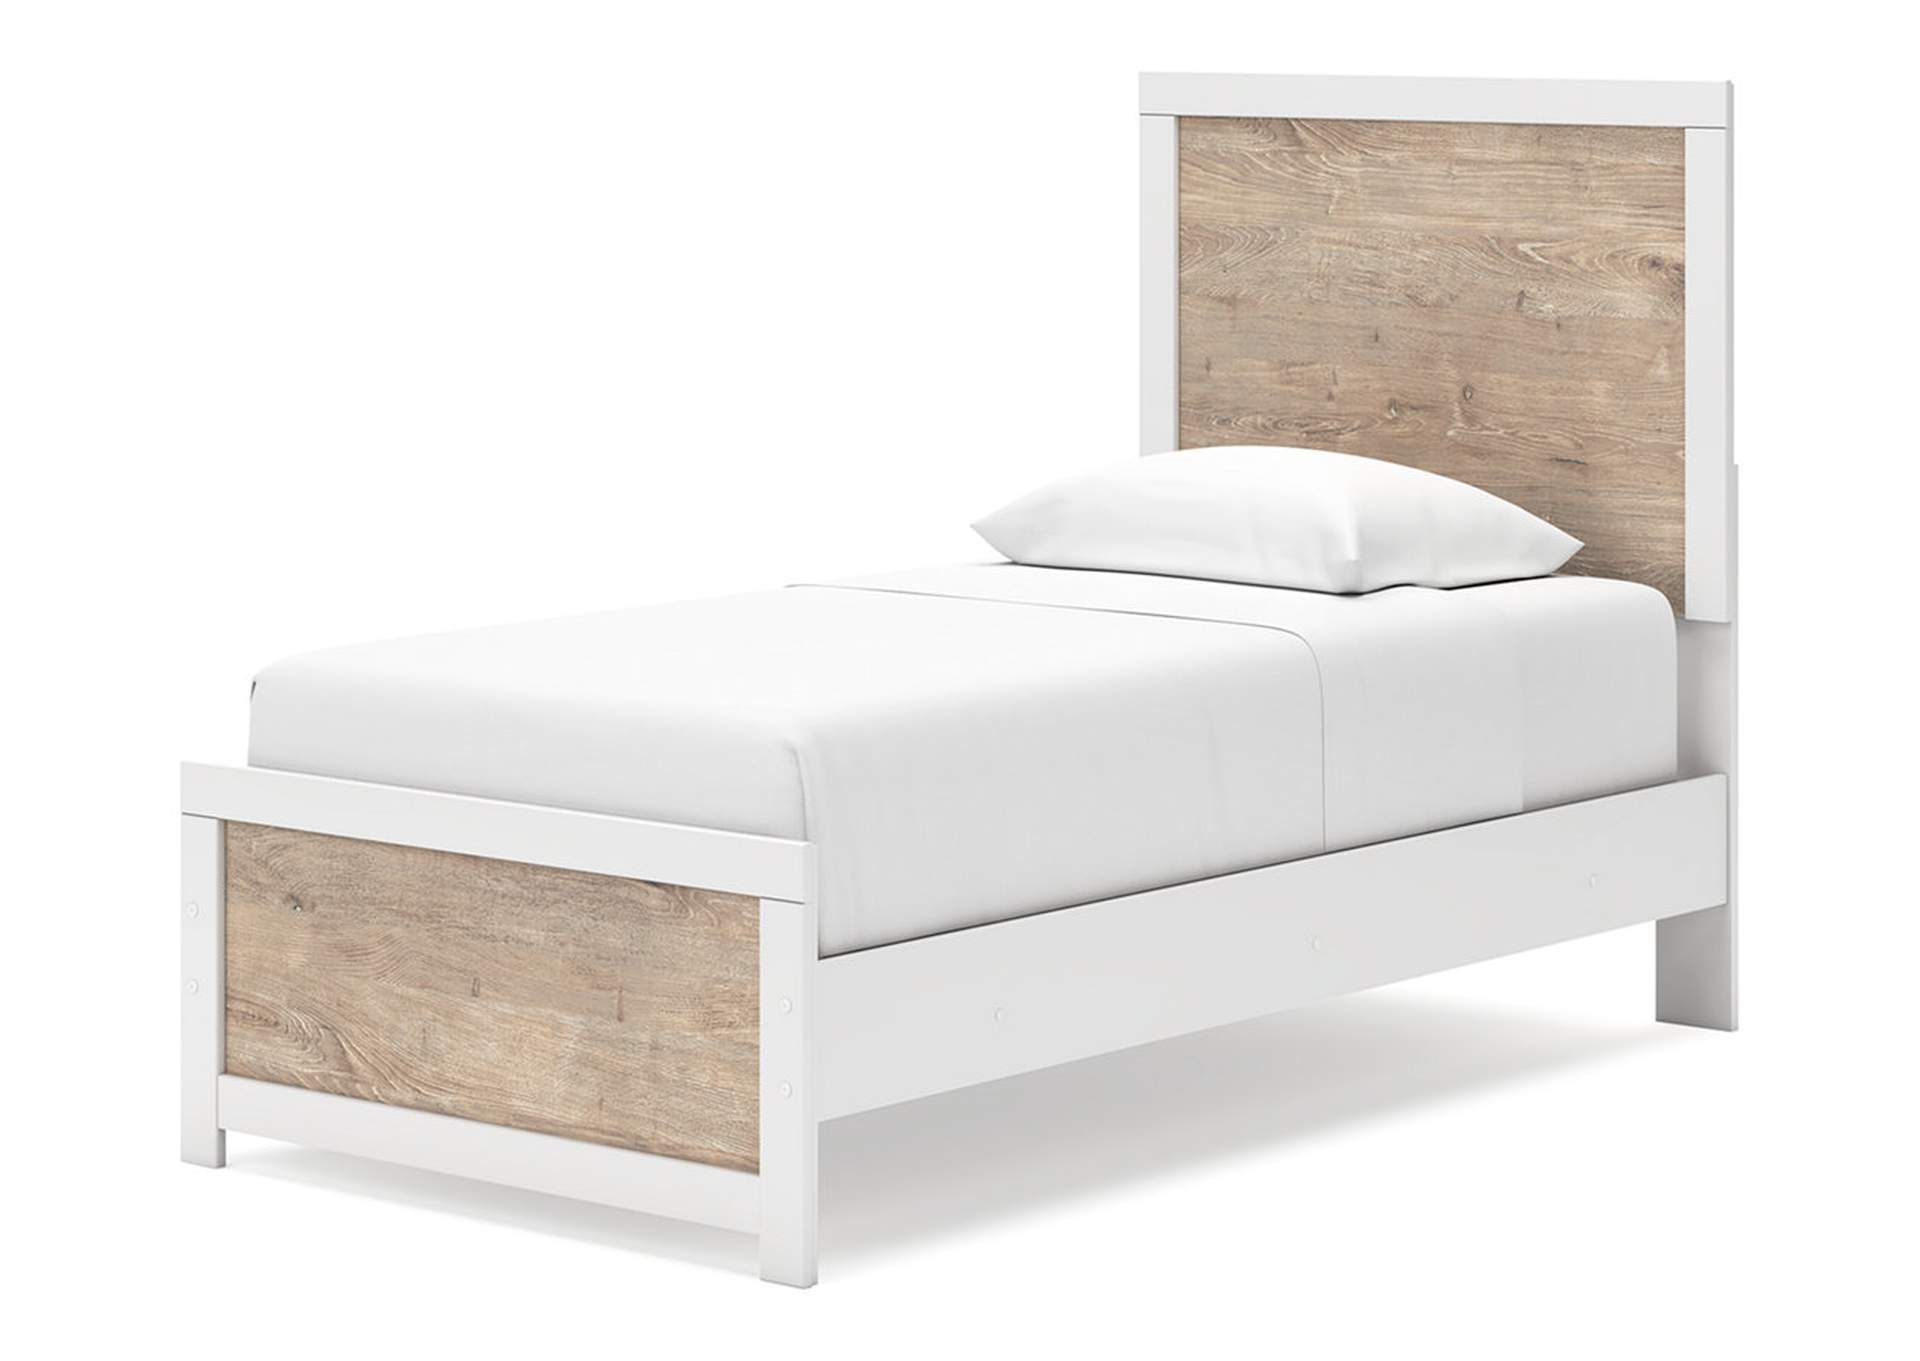 Charbitt Twin Panel Bed,Signature Design By Ashley